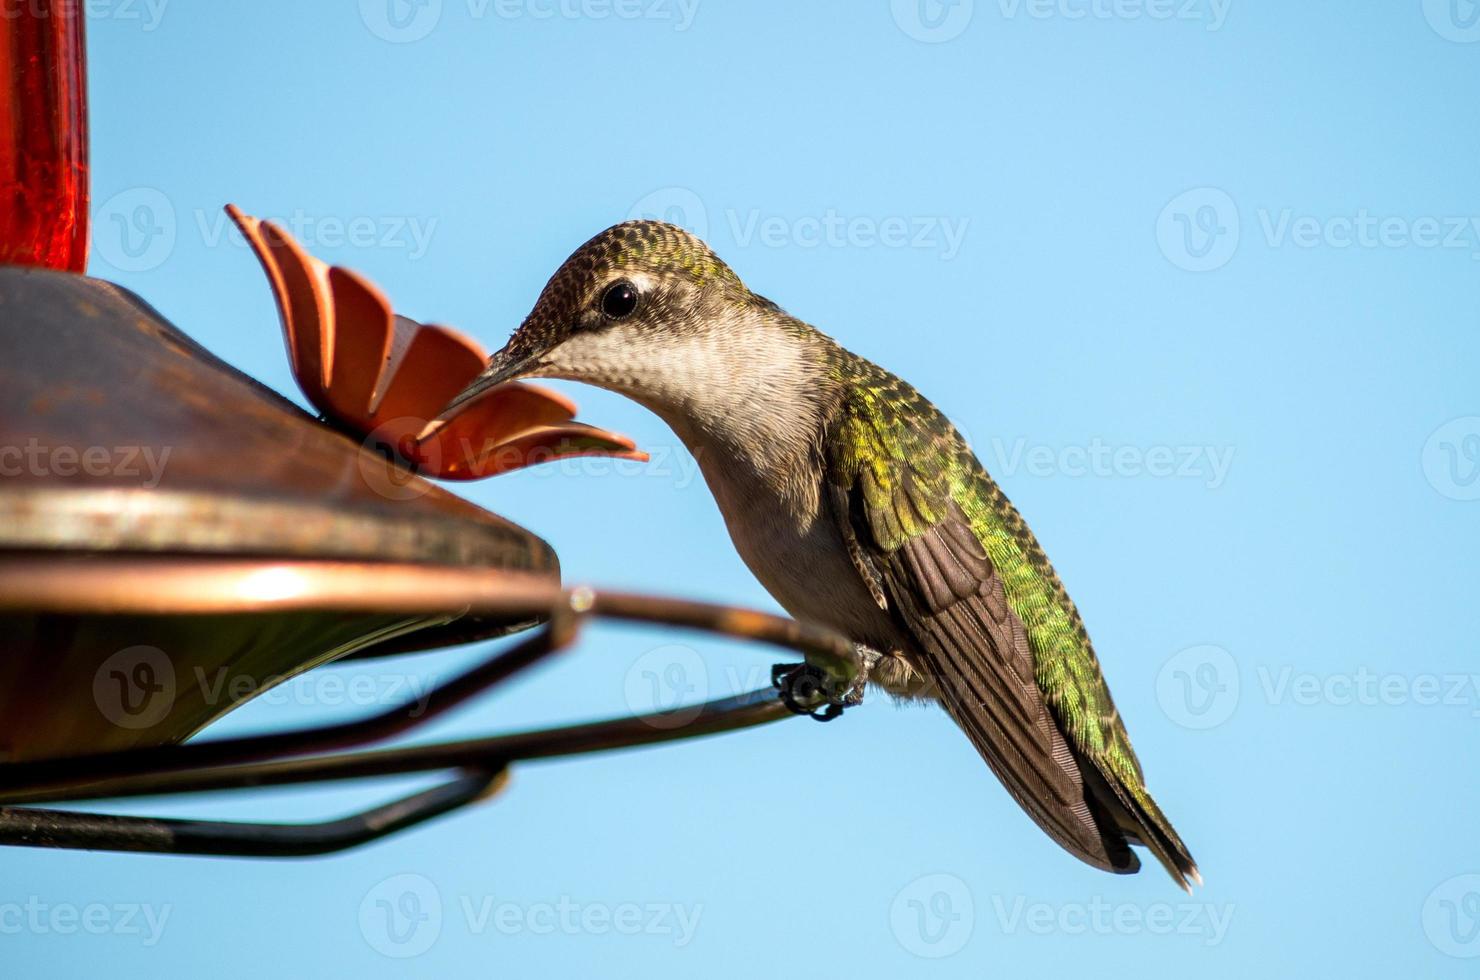 Ruby-throated Hummingbird photo